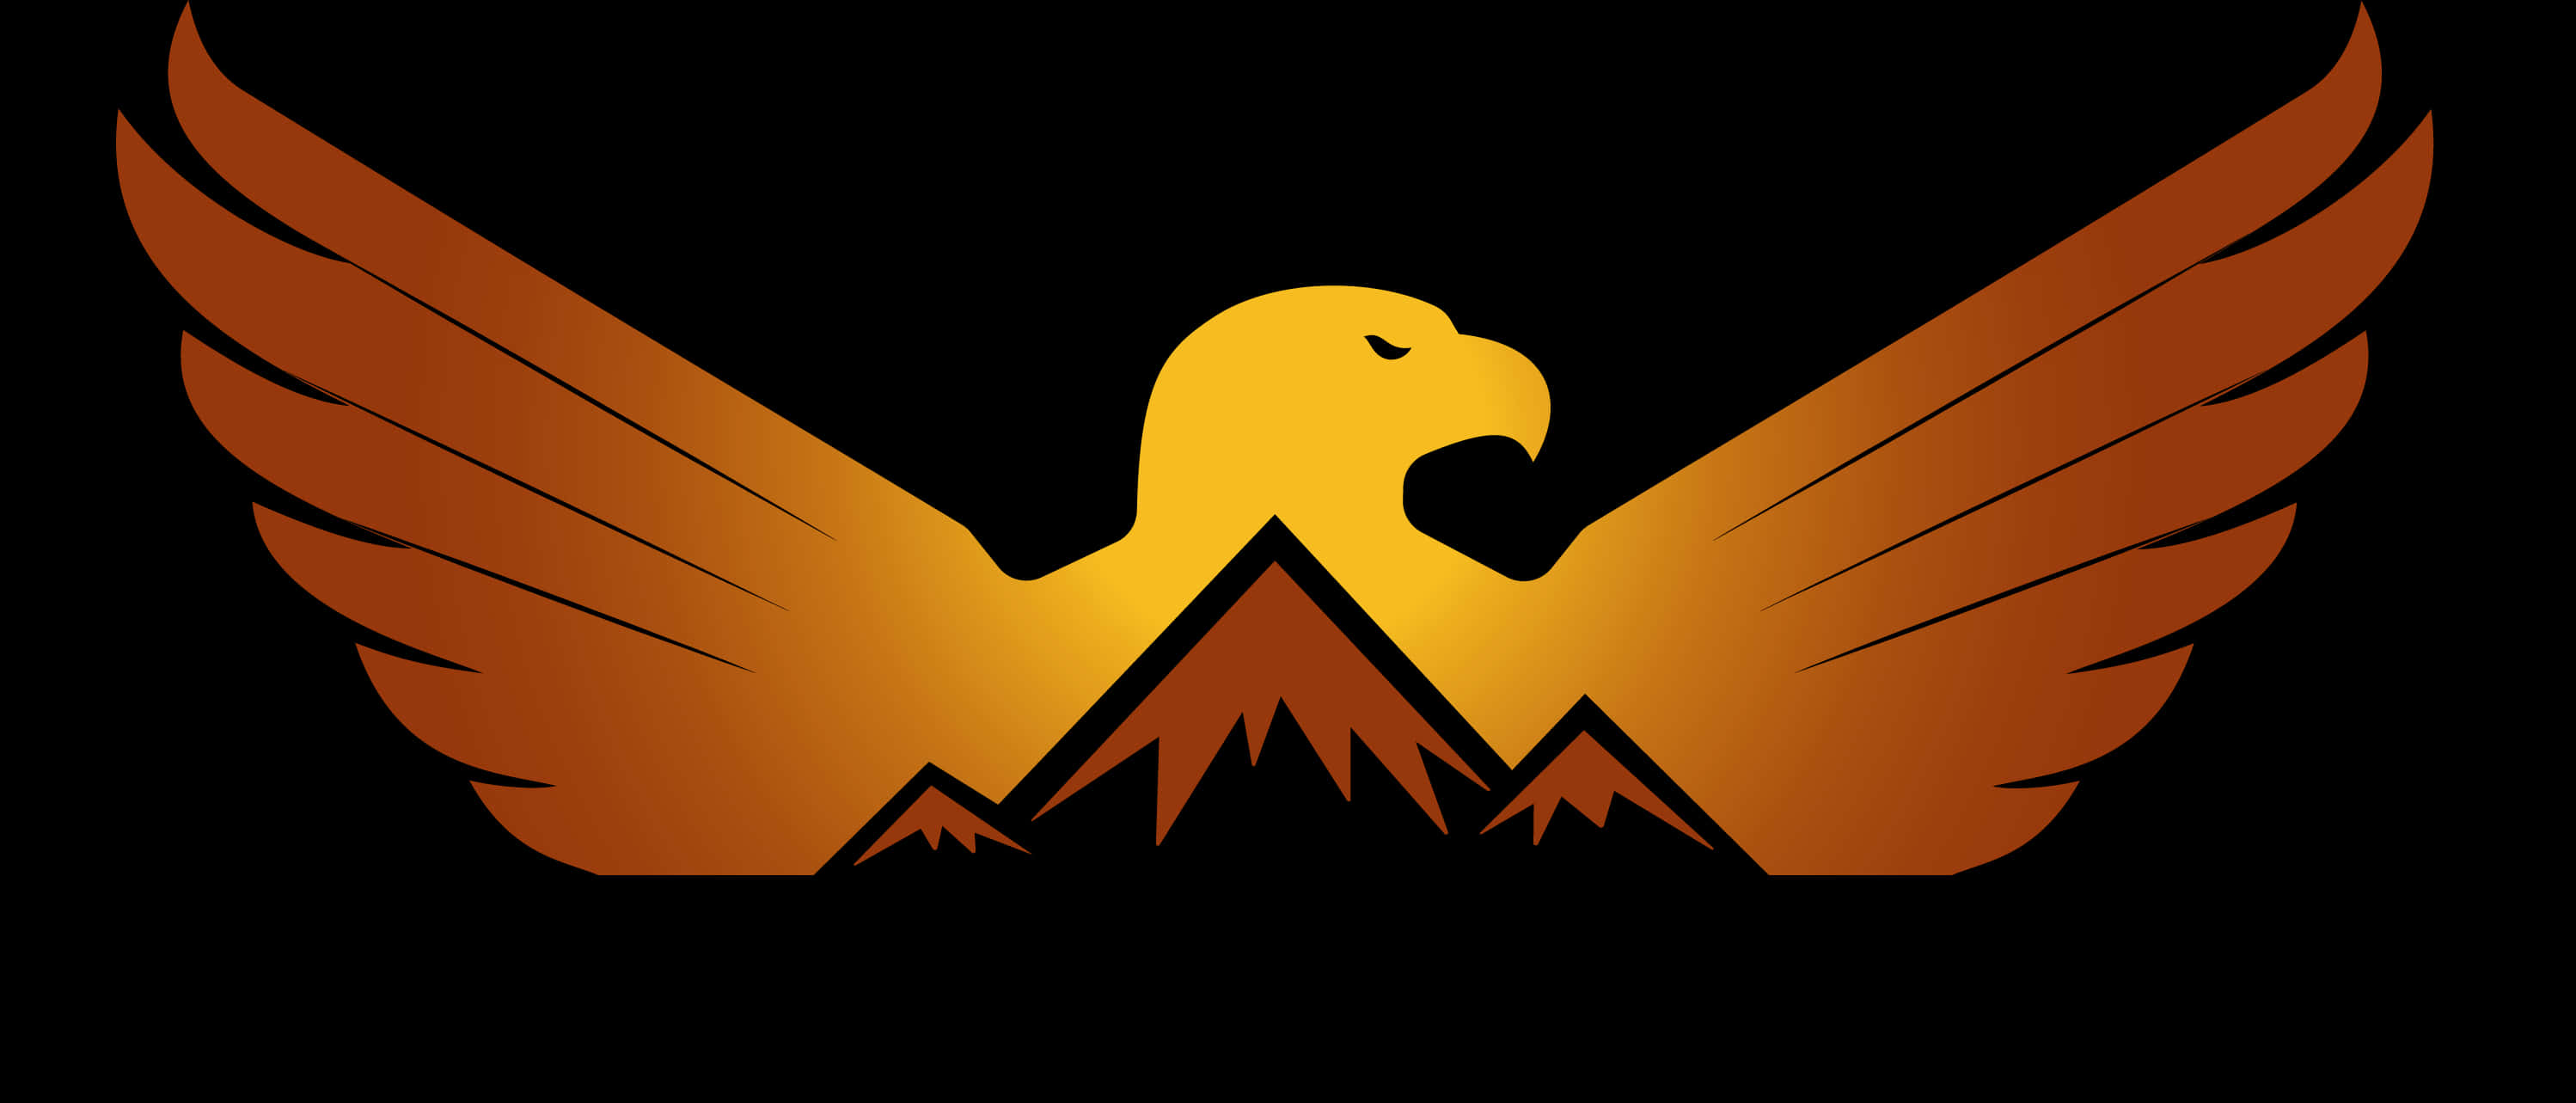 Golden Eagle Silhouette Logo PNG